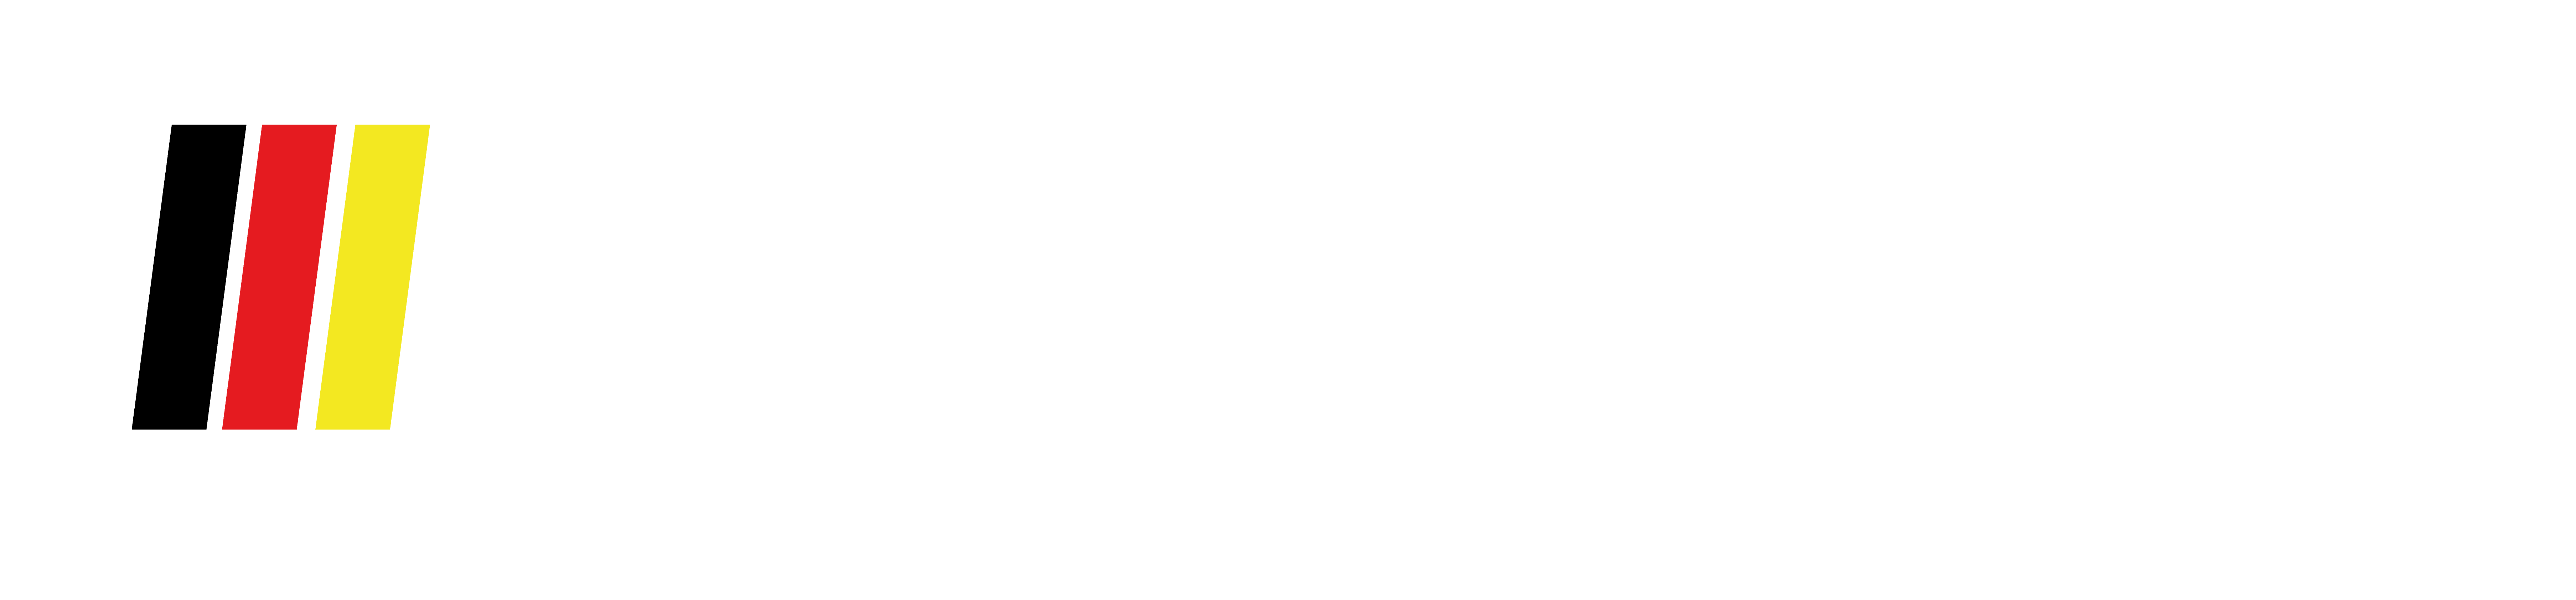 Ide Motors